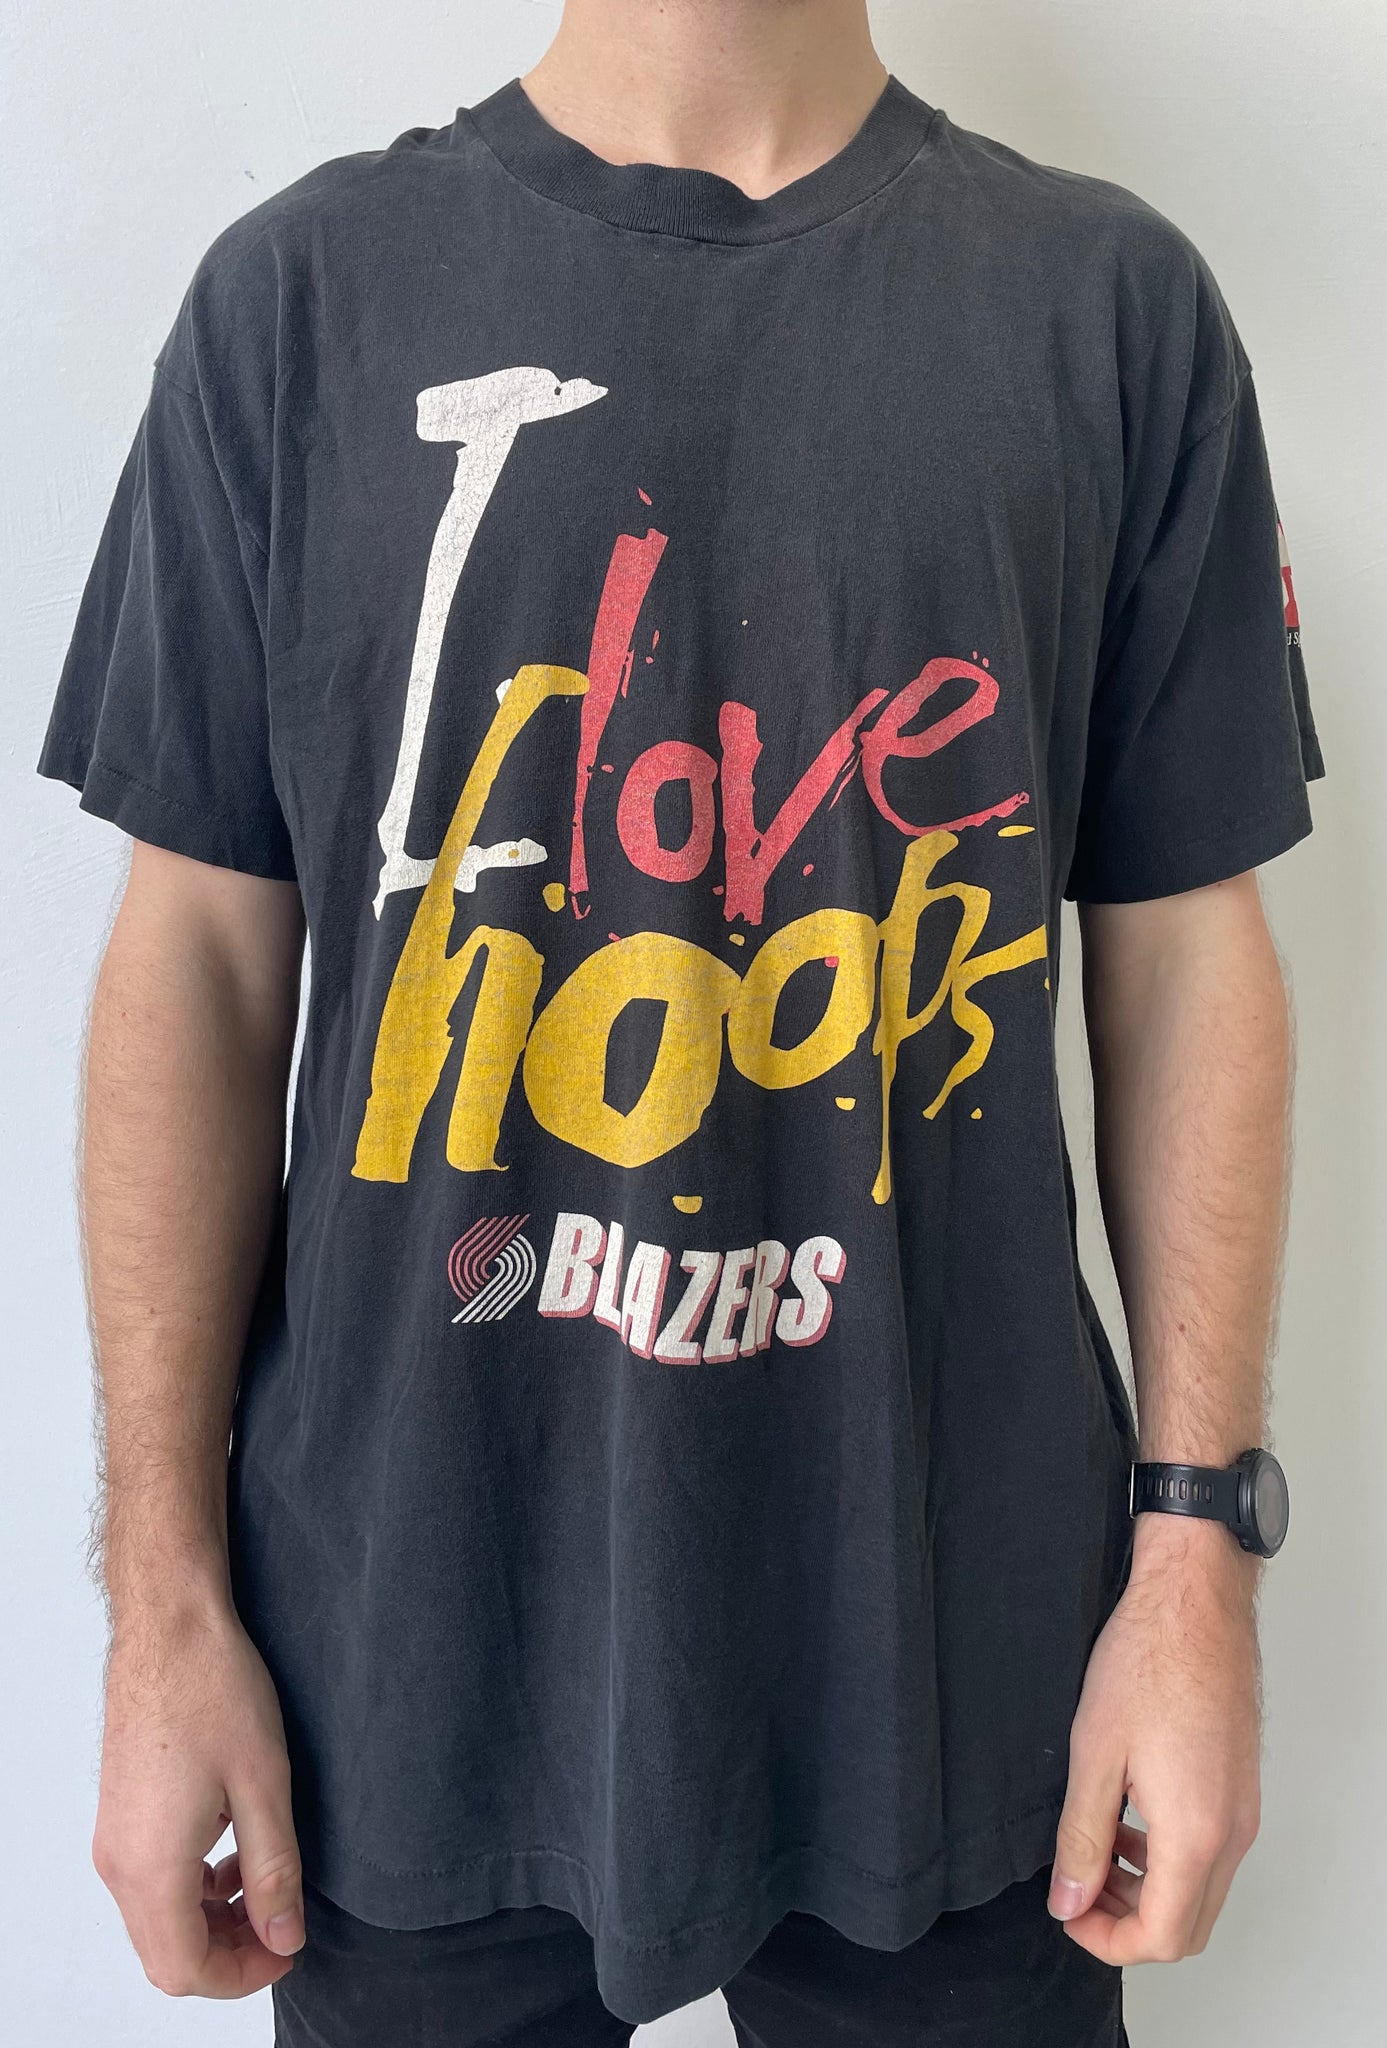 NBA Portland Trail Blazers "I Love Hoops" Black T-shirt